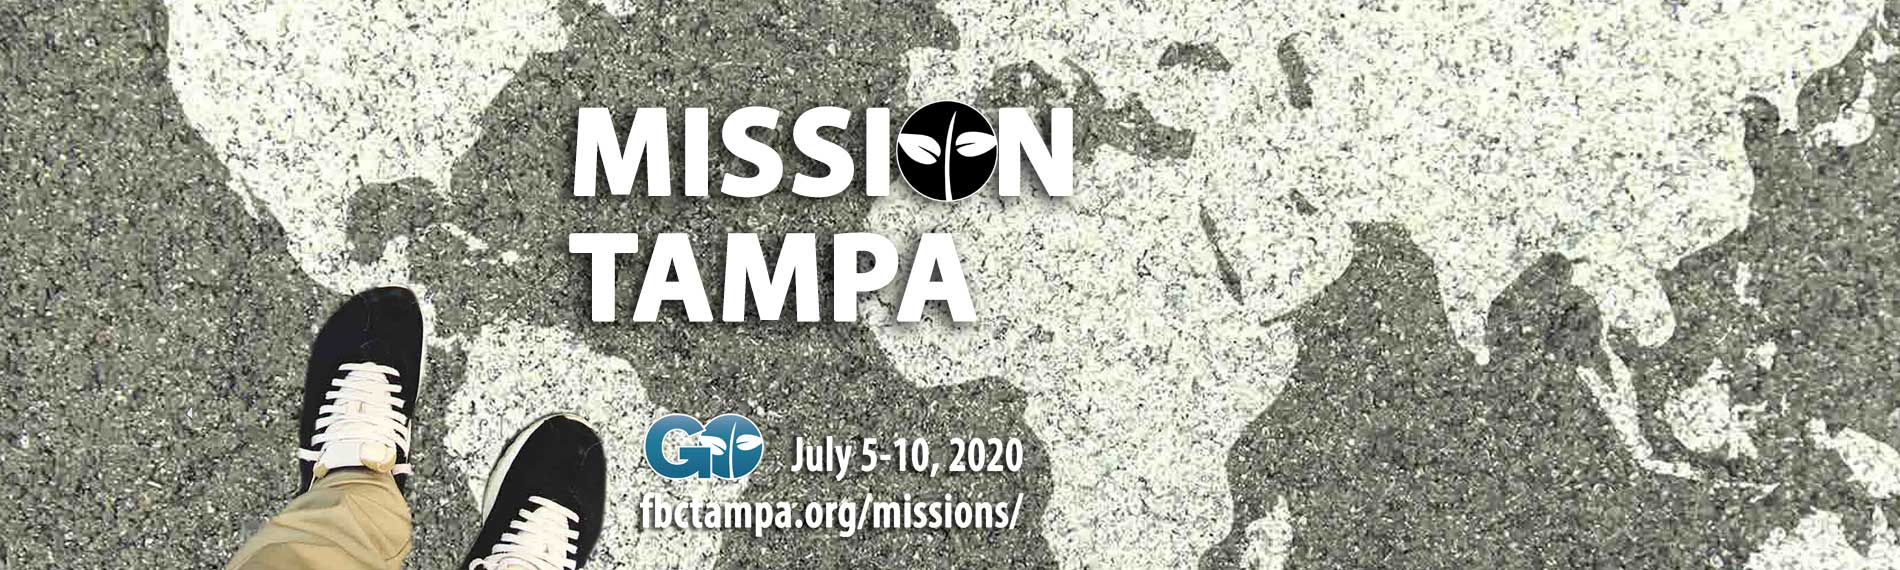 Missions Prayer Breakfast - Florida Baptist Convention